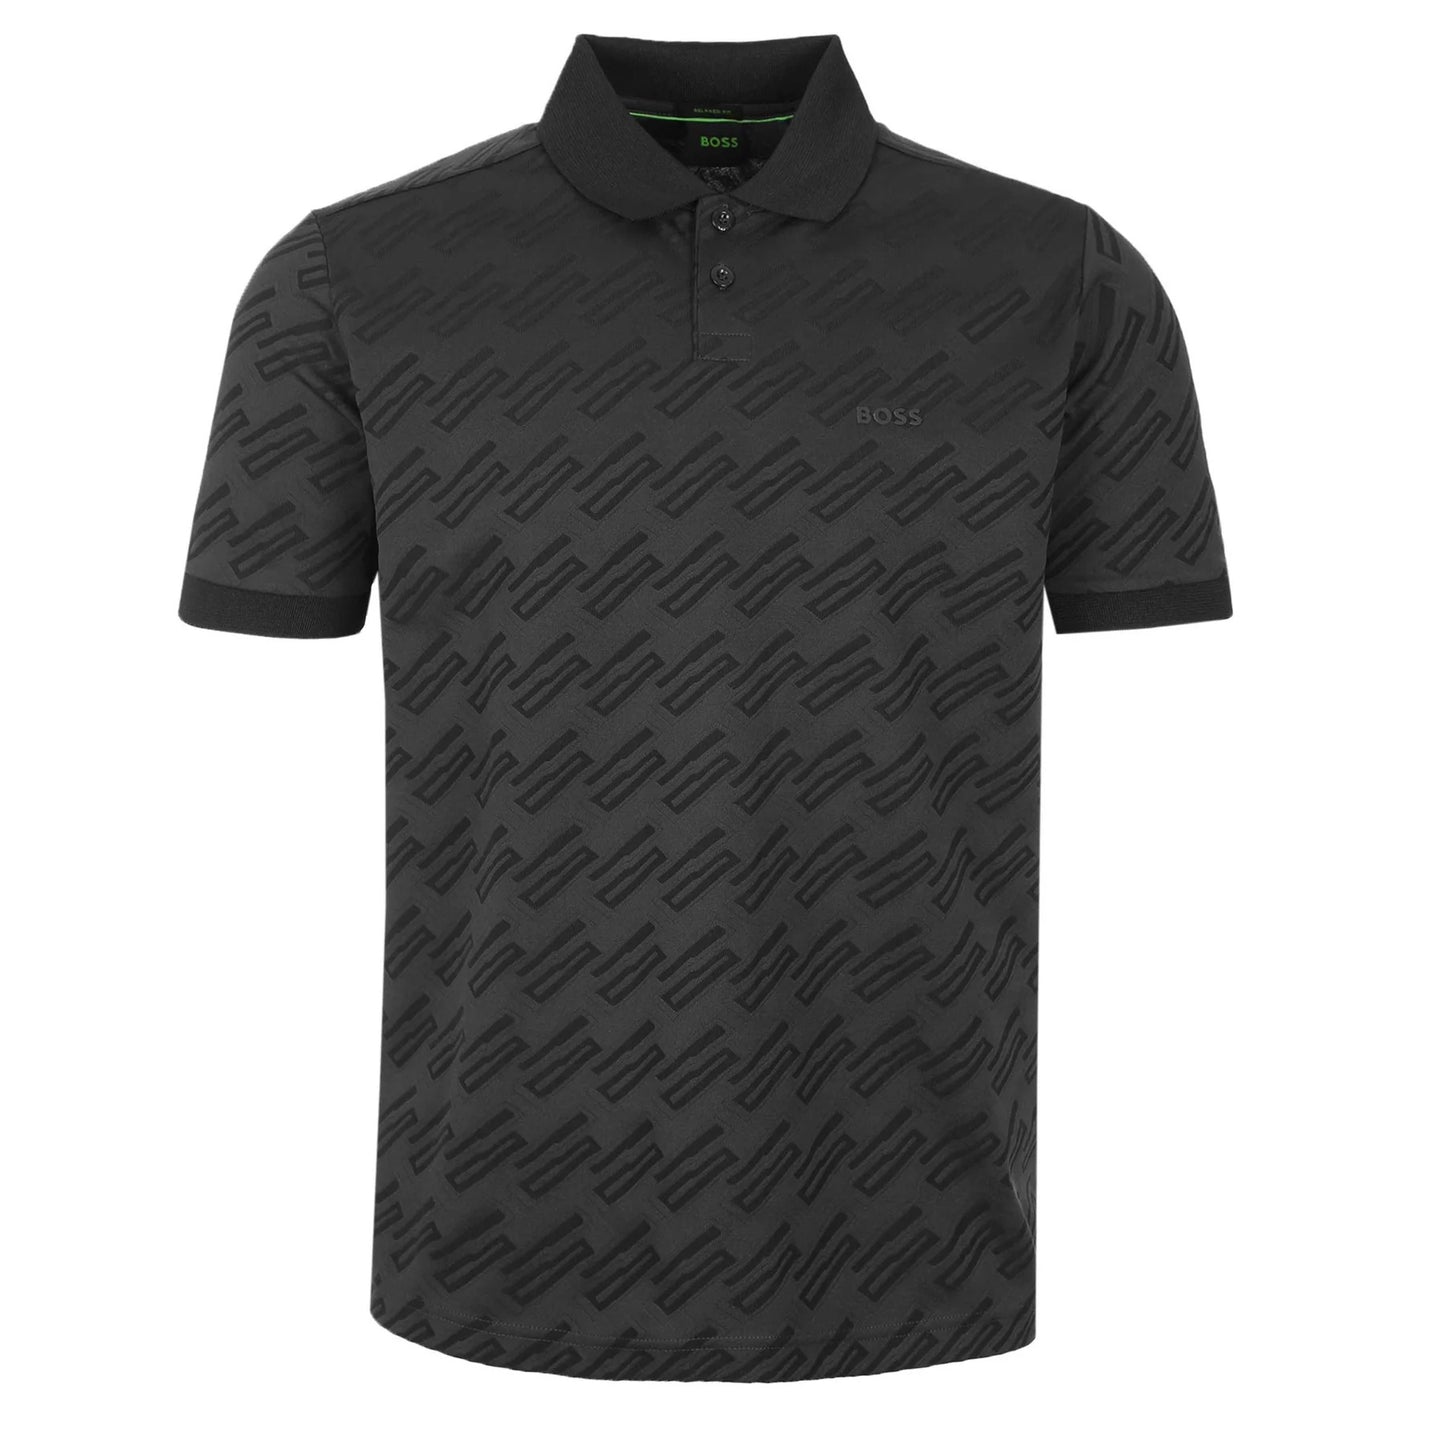 Hugo Boss Men's Pirax Polyester Monogram Jacquard Polo T-Shirt, Black